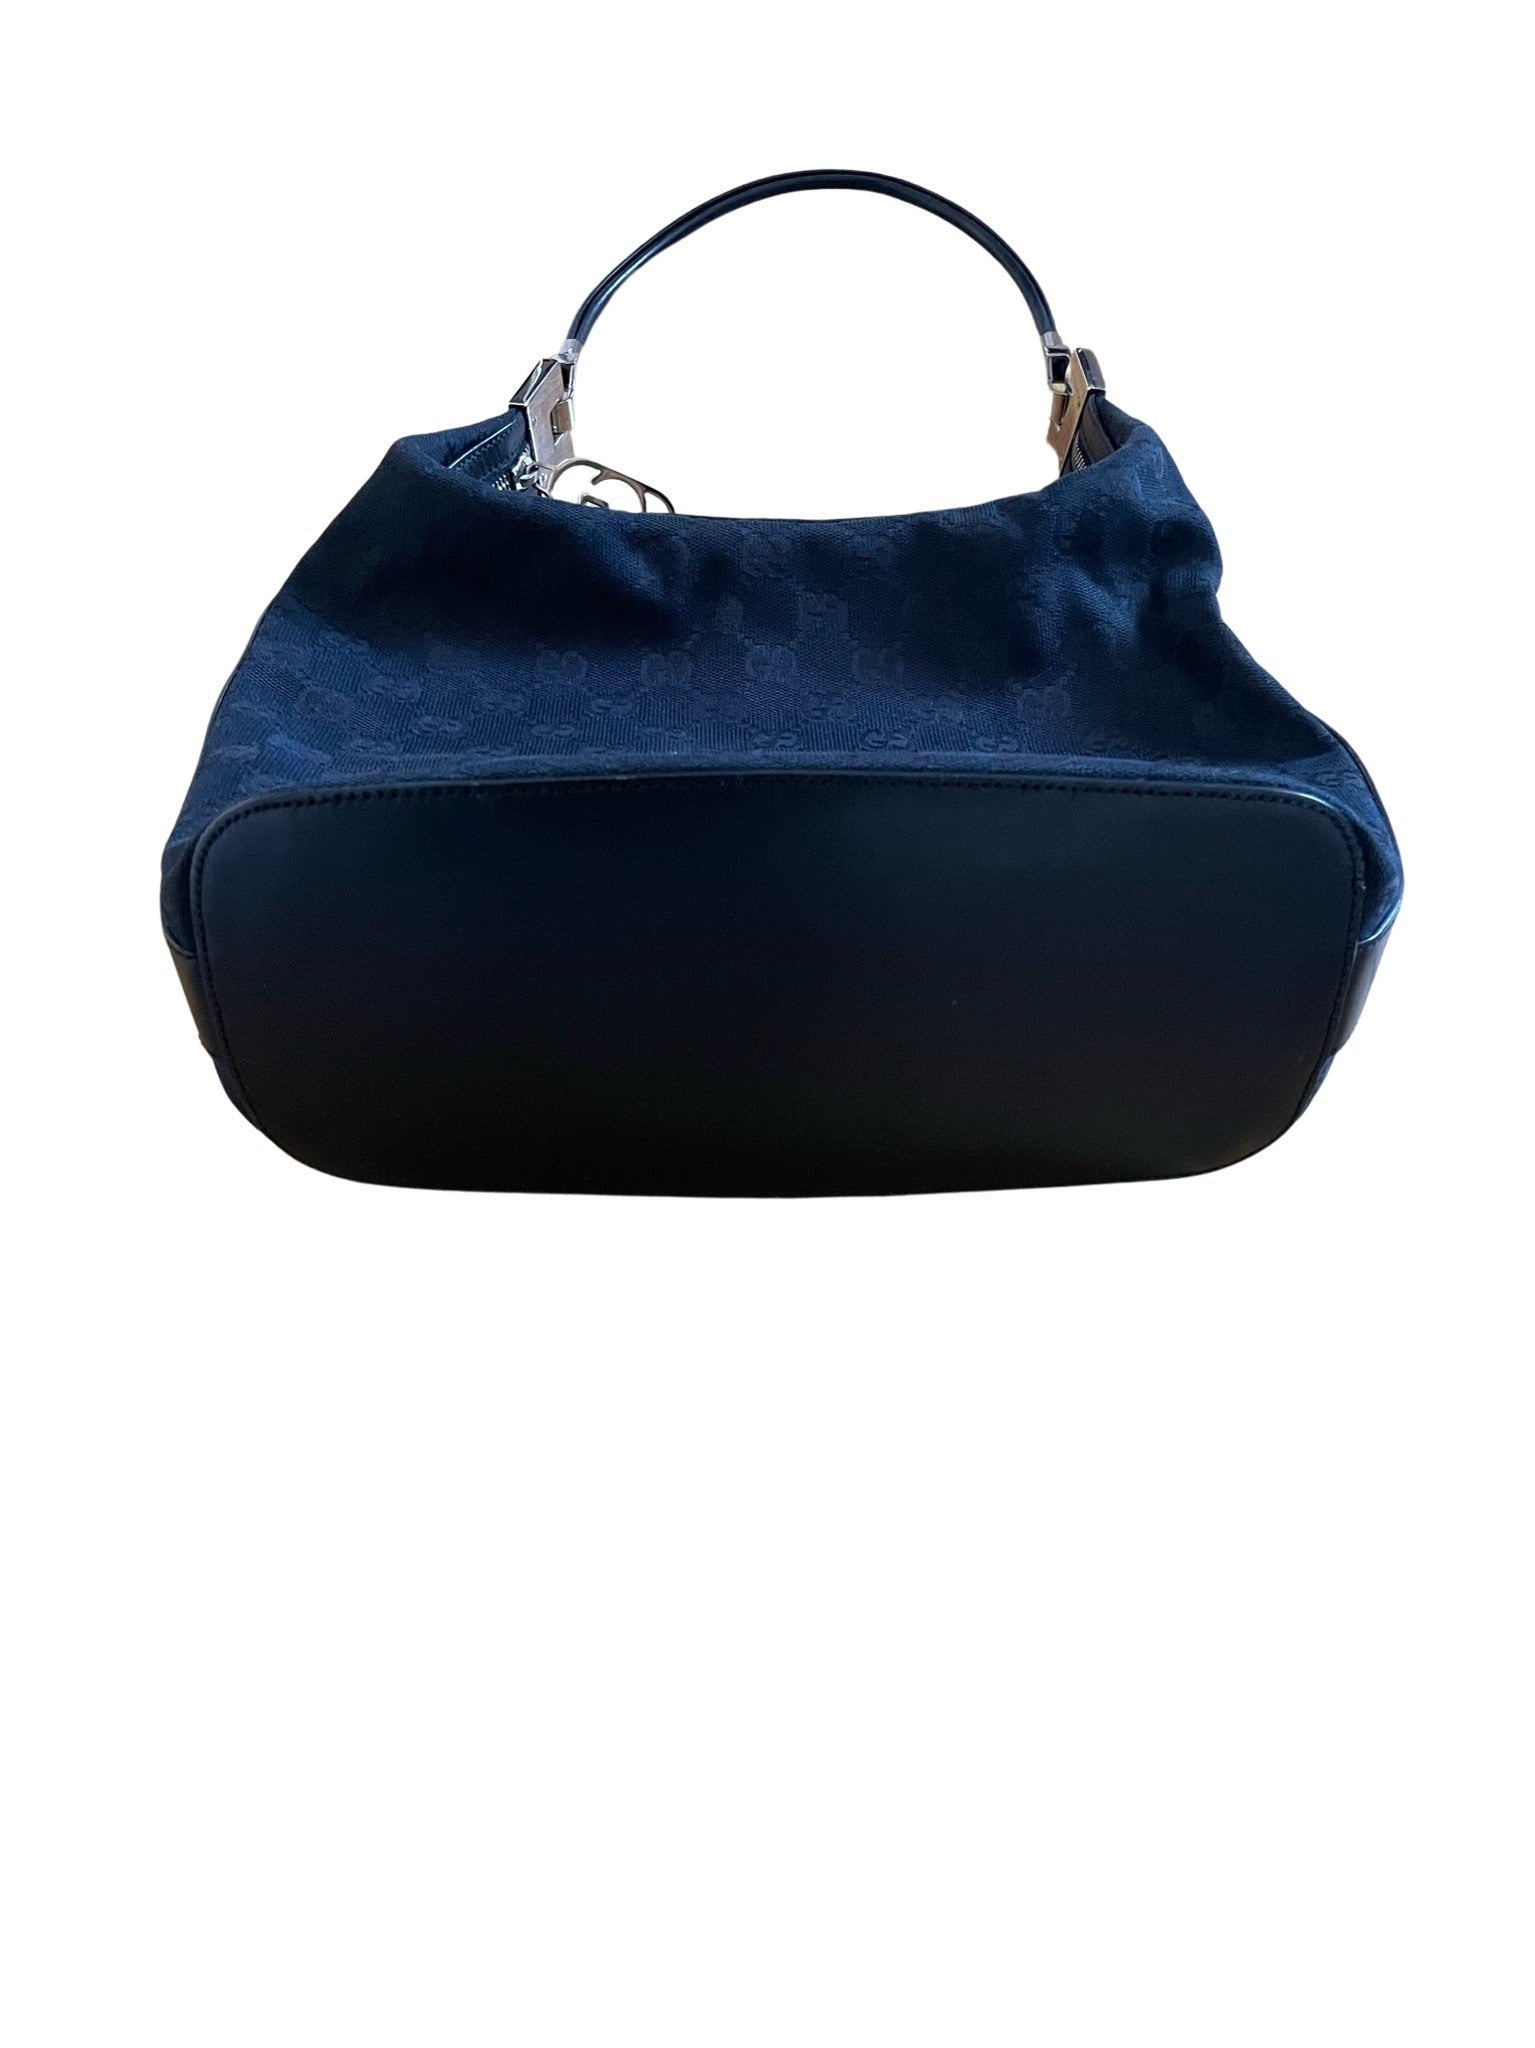 Gucci Black Jacquard Leather Shoulder Bag – Kilta Bags